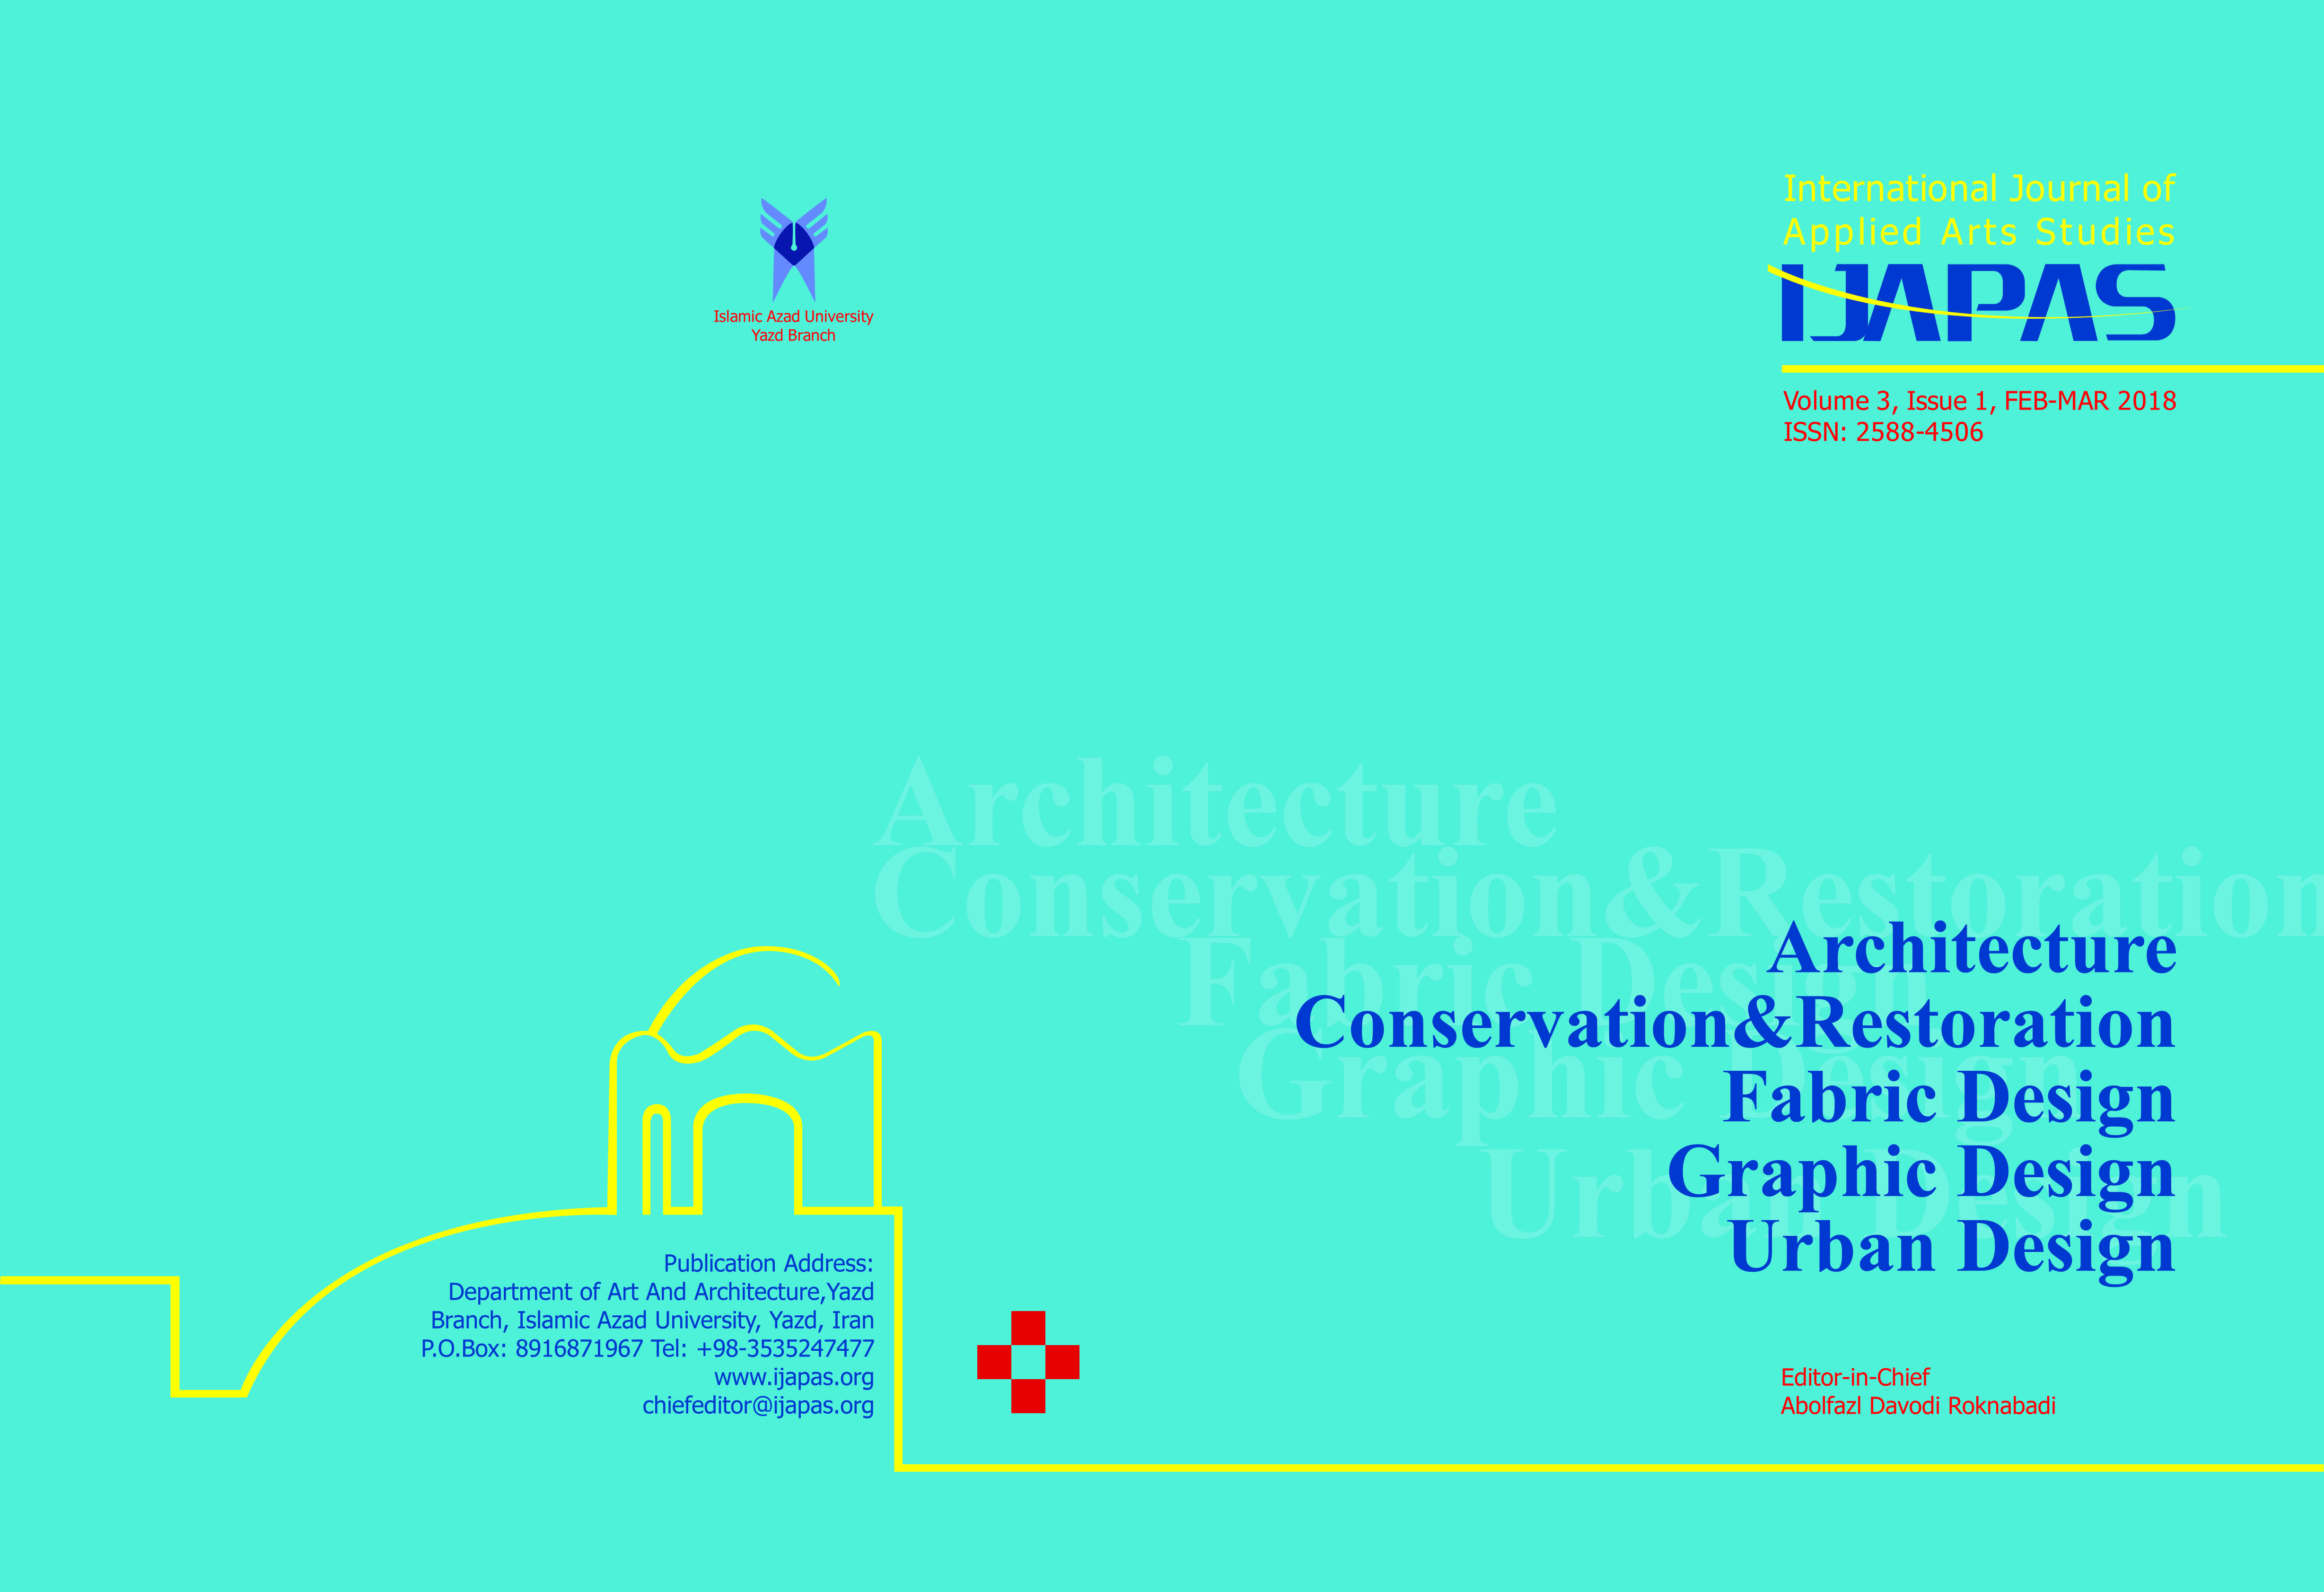 Architecture, Conservation and Restoration, Fabric Design, IJAPAS